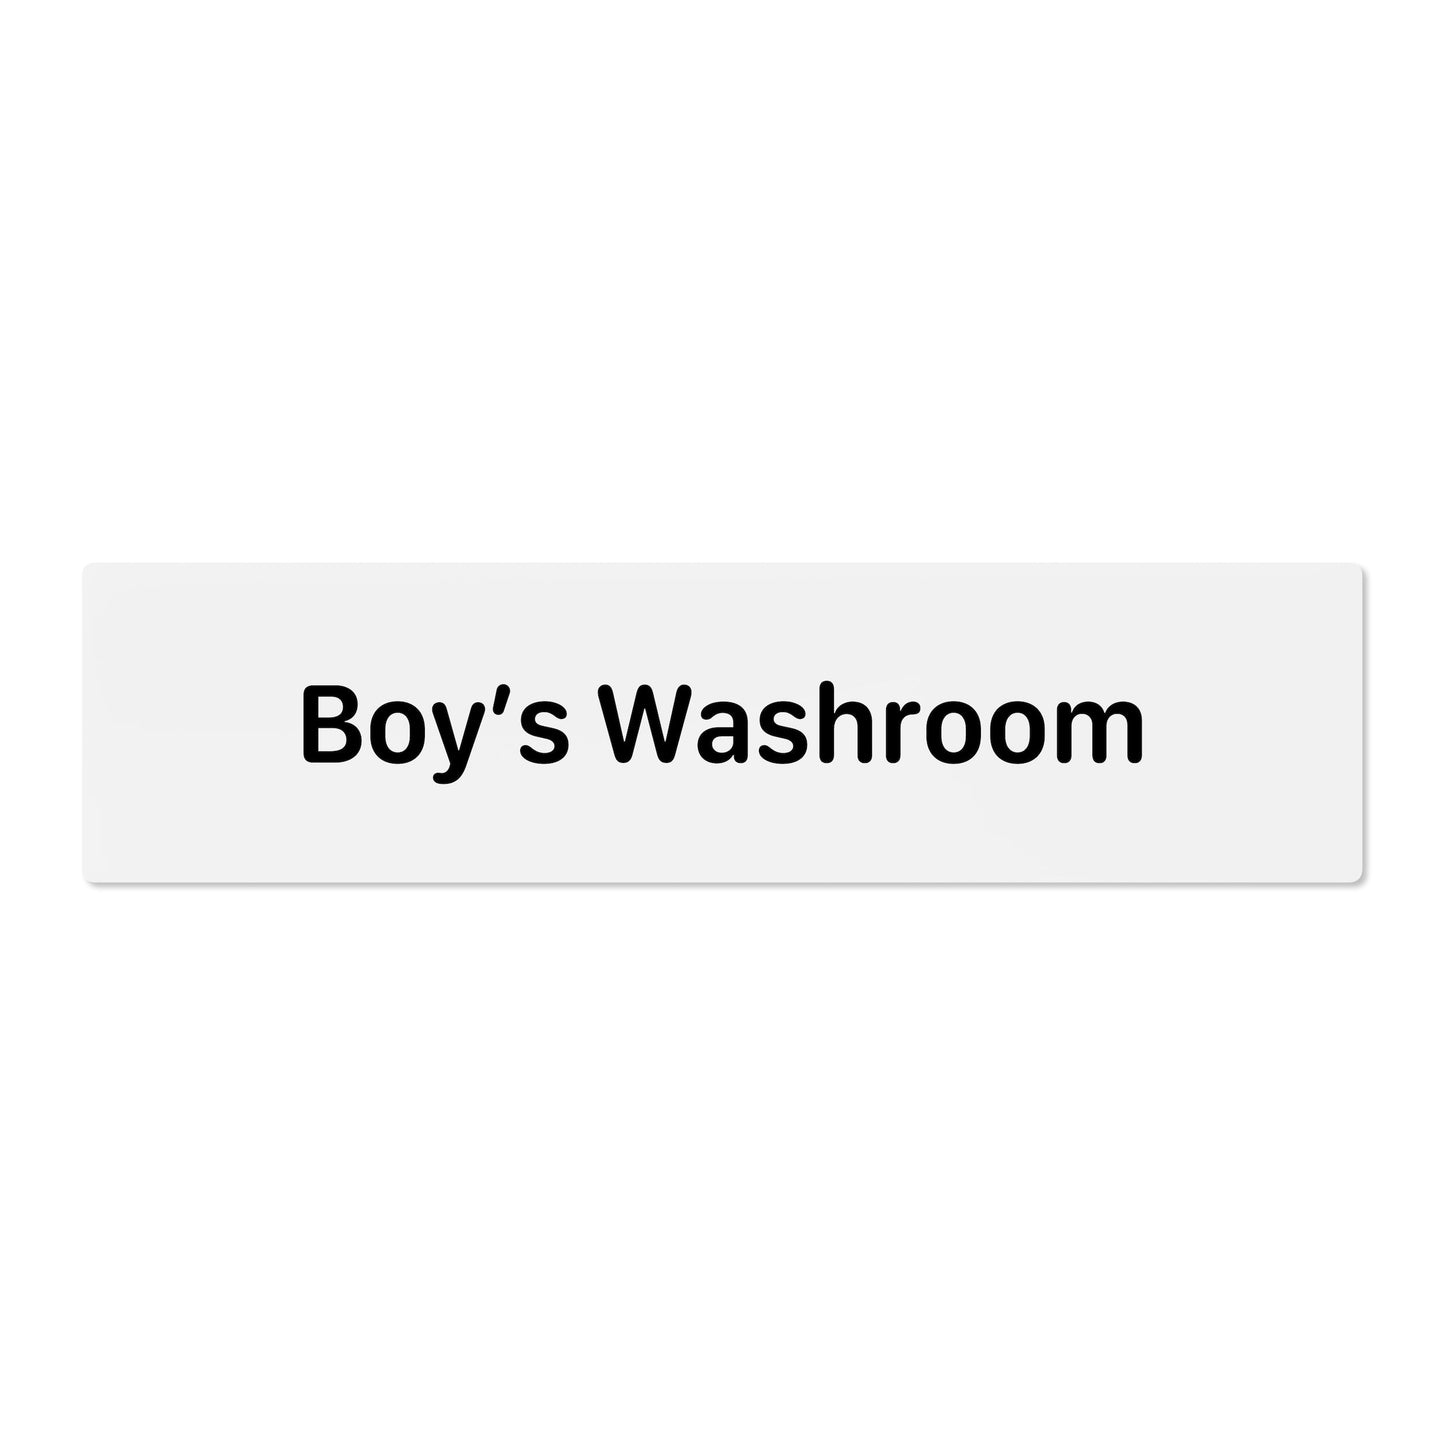 Boy’s washroom